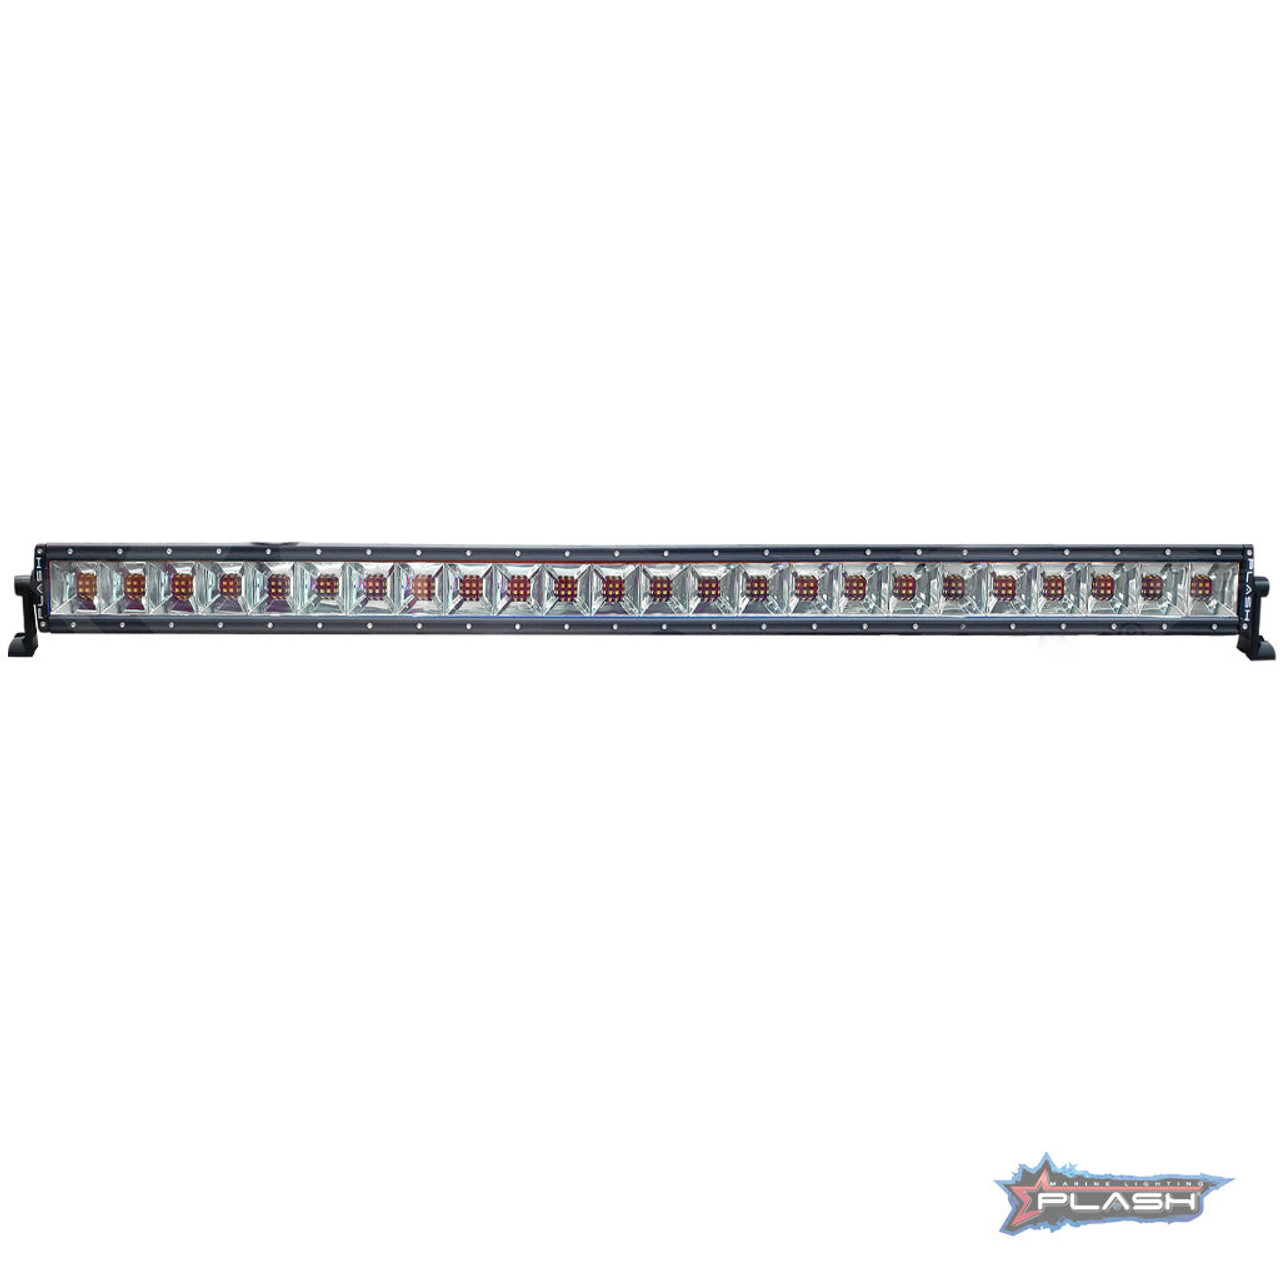 Plash - 50" Fishing Light Bar - 500W, Warm White, 3000K, 9-36V, 17A, 28688lm (XX-50-WW) - Apollo Lighting